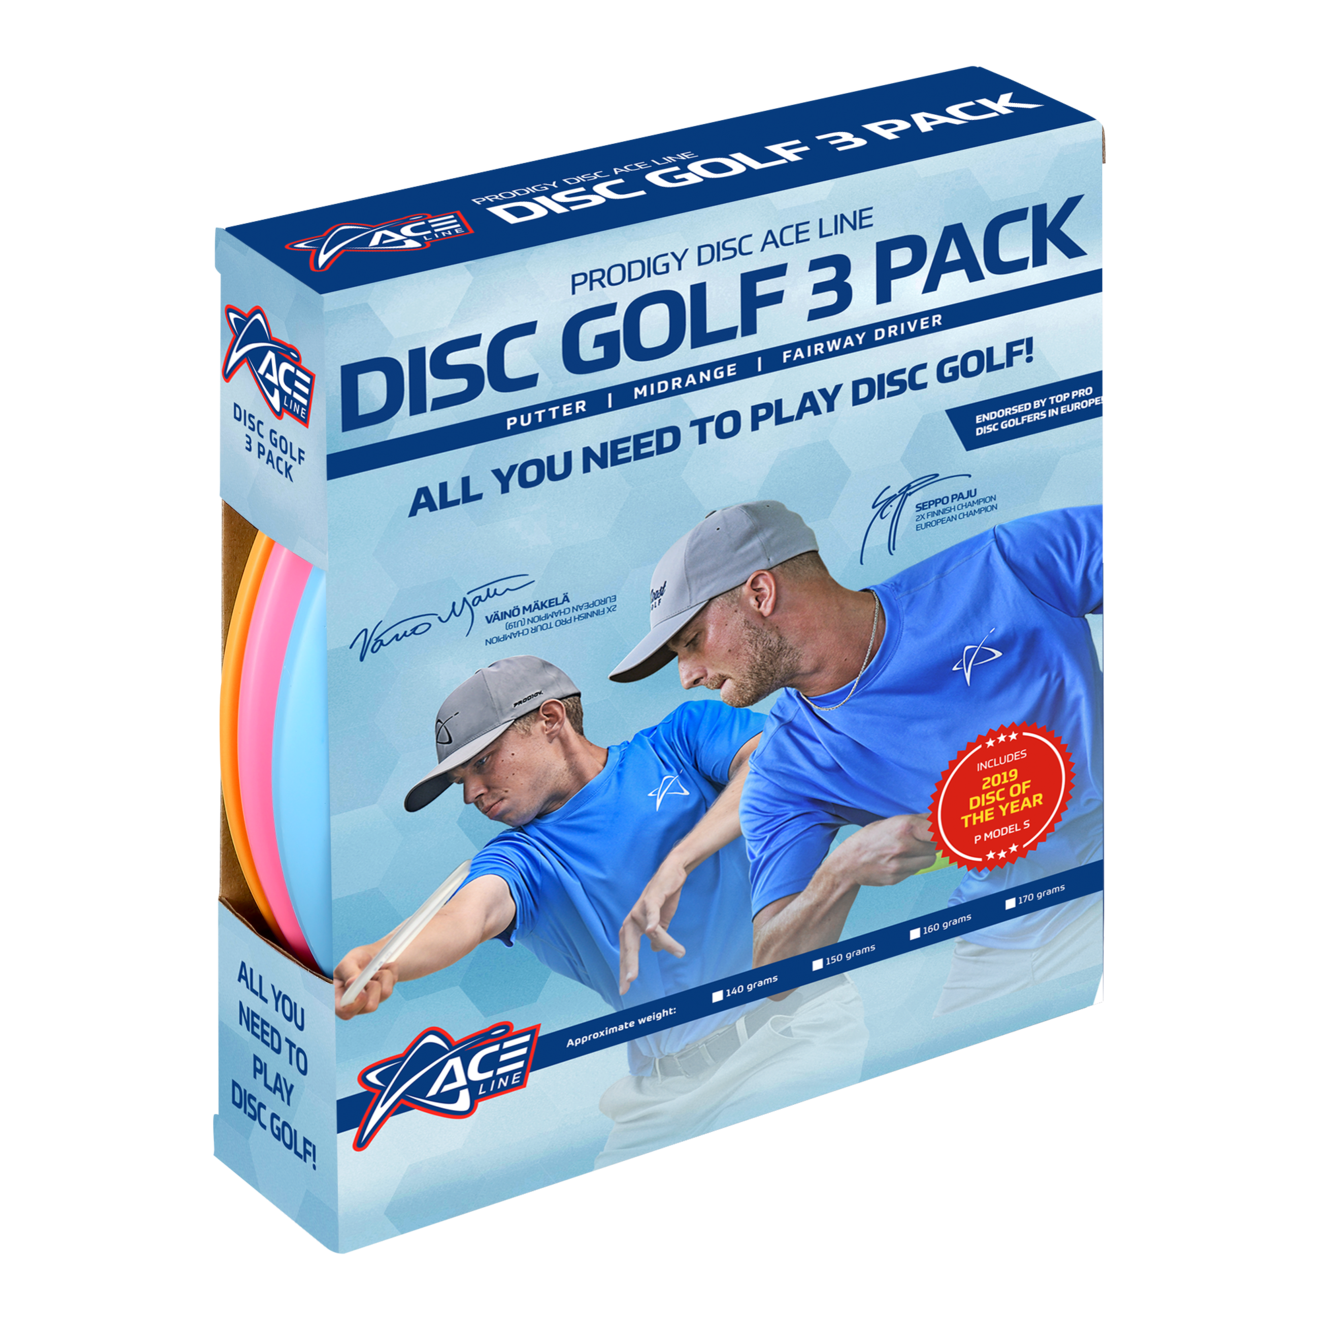 Prodigy ACE LINE DISC GOLF 3 PACK (KEVYT) - frisbeegolfsetti tuote hintaan 17,95€ liikkeestä Budget Sport